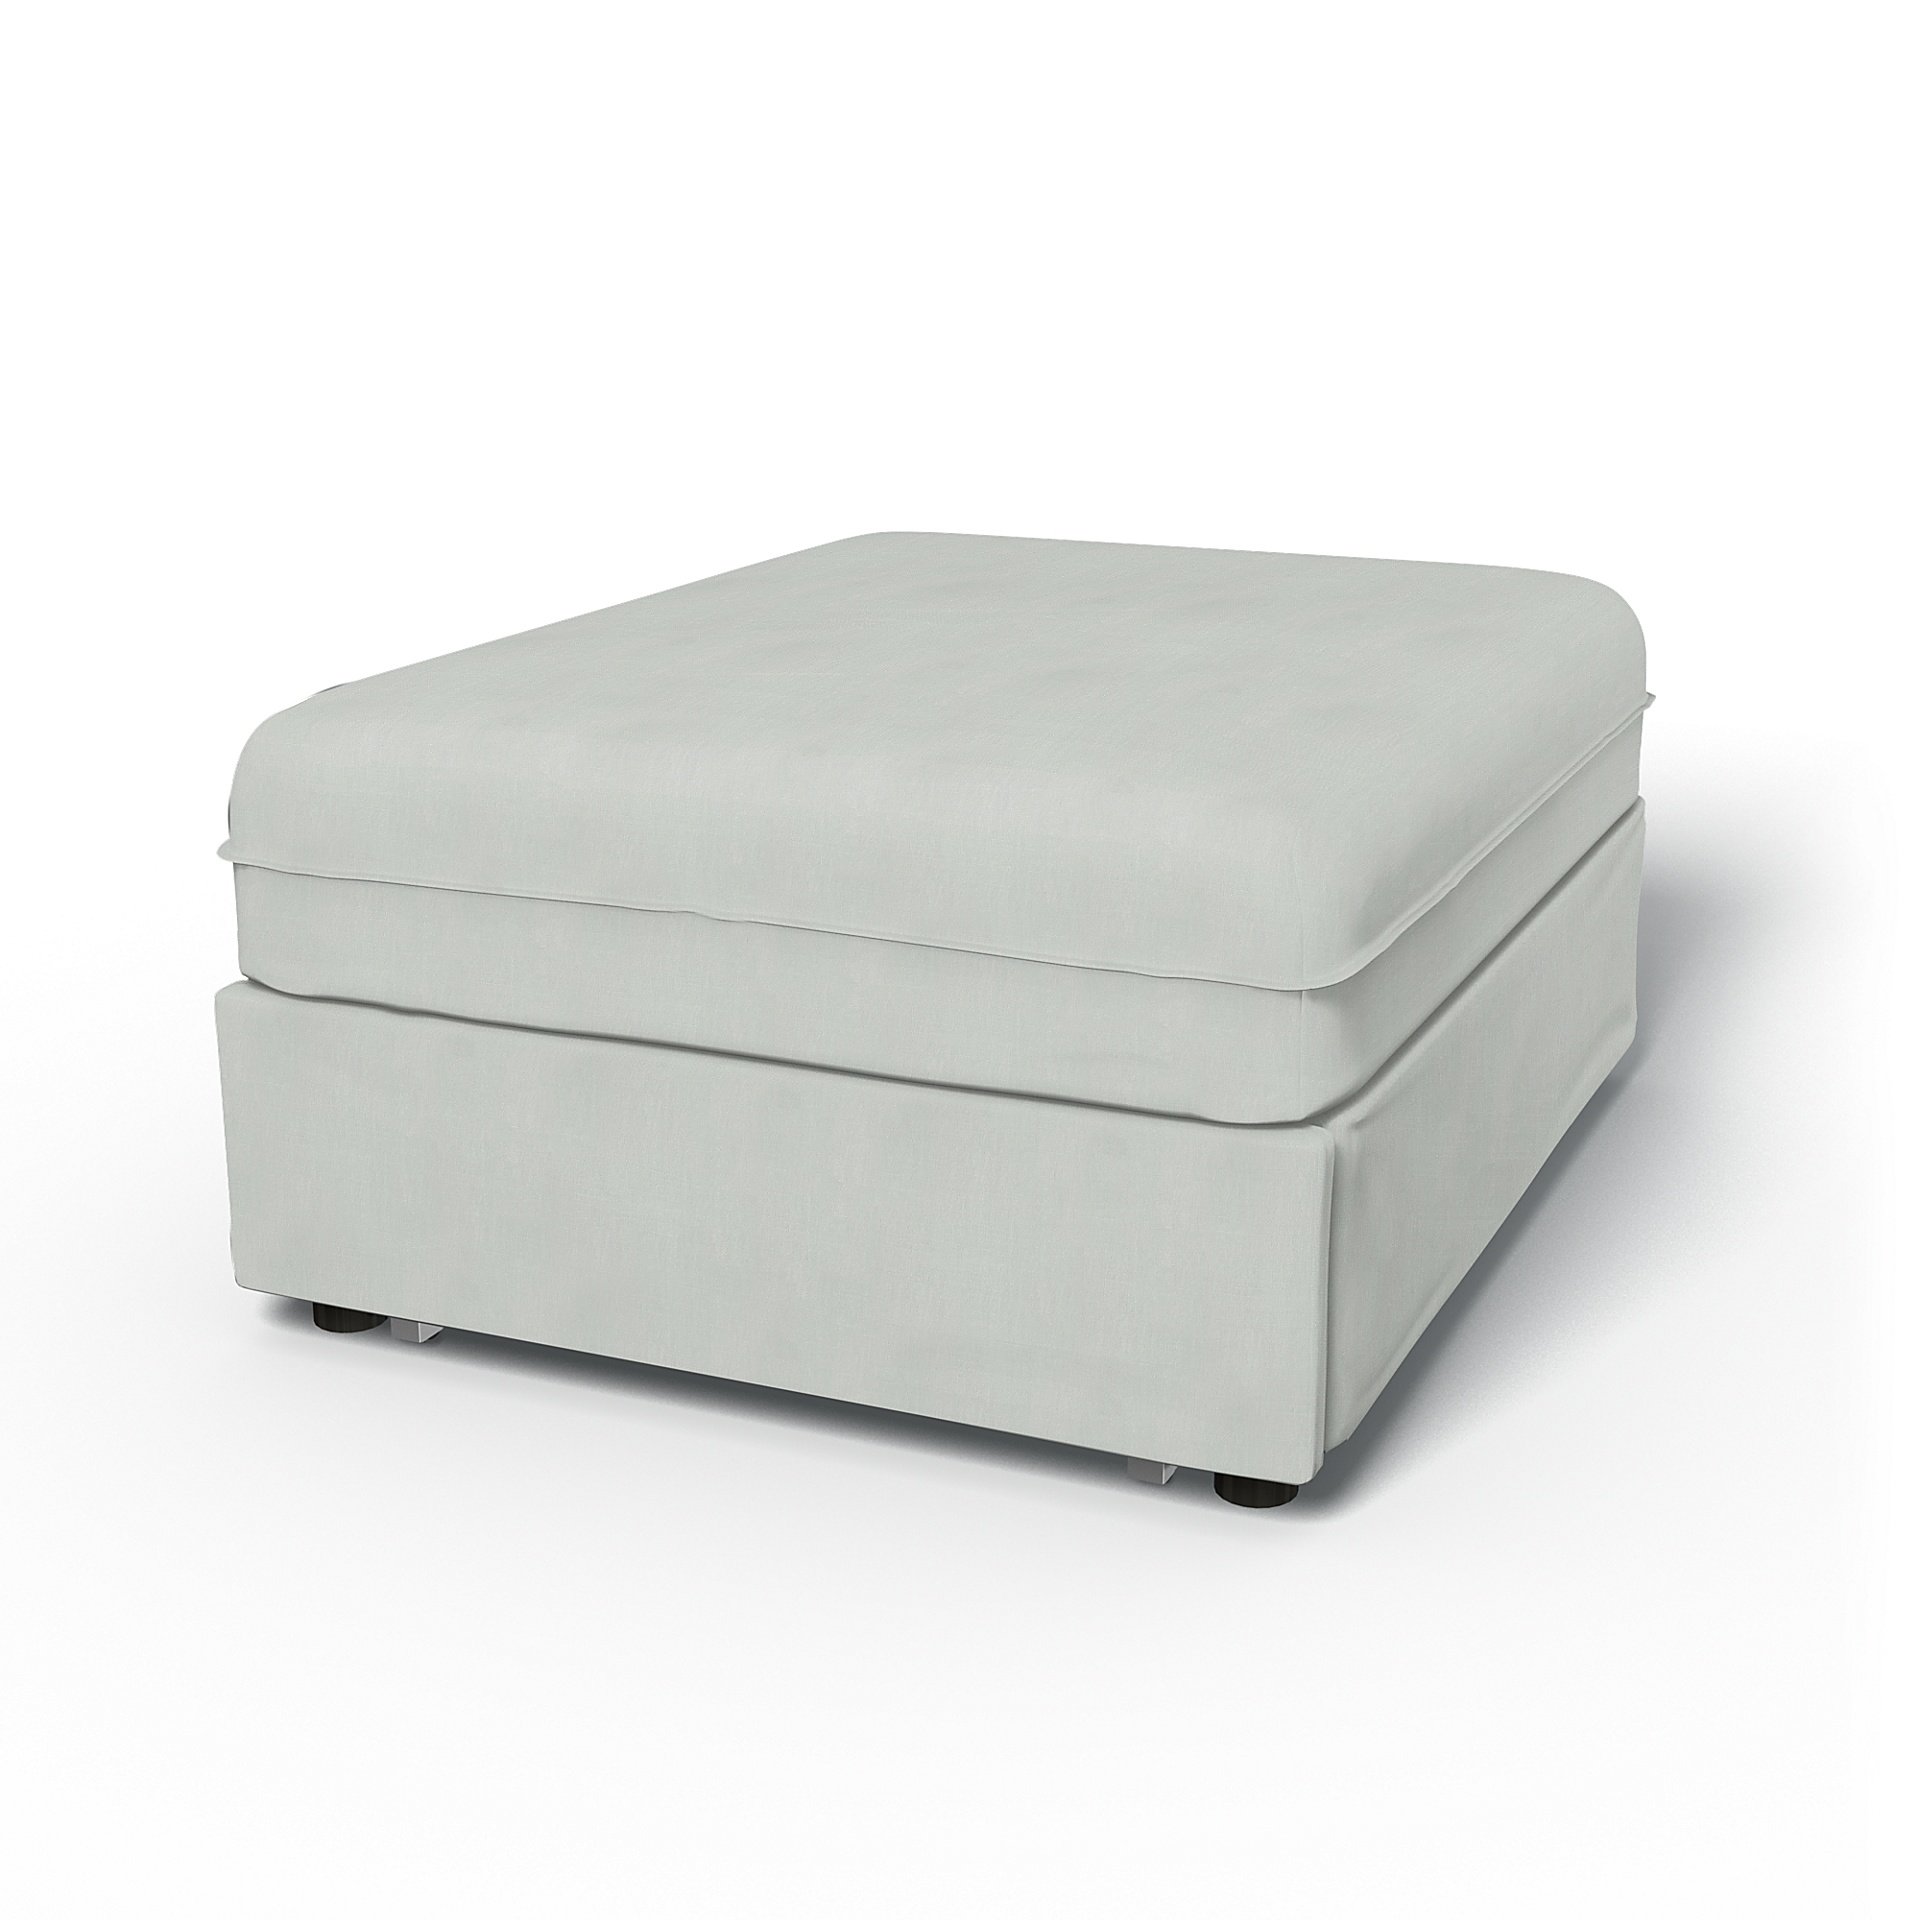 IKEA - Vallentuna Seat Module with Sofa Bed Cover 80x100cm 32x39in, Silver Grey, Linen - Bemz